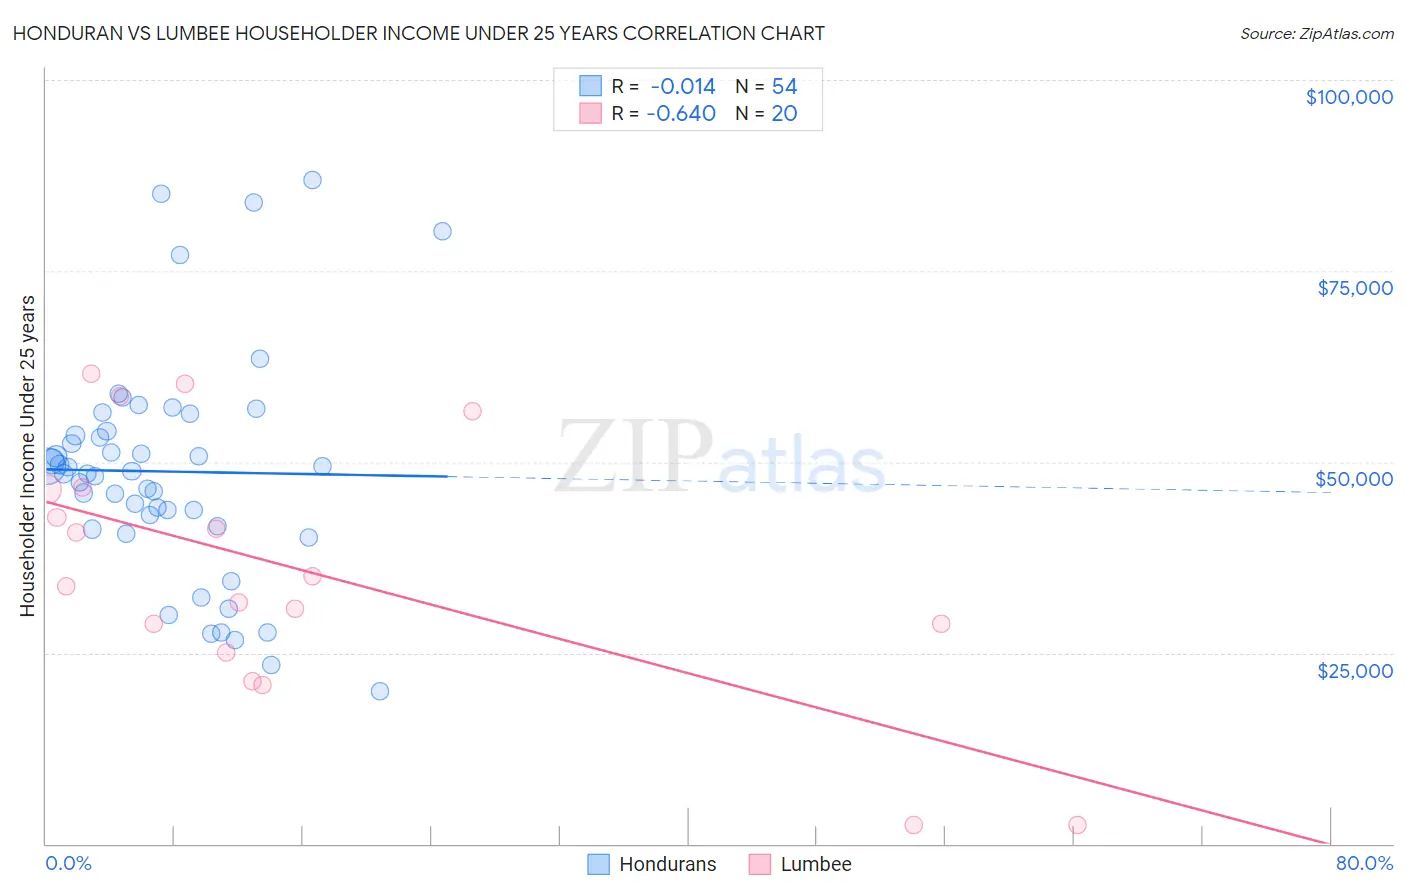 Honduran vs Lumbee Householder Income Under 25 years